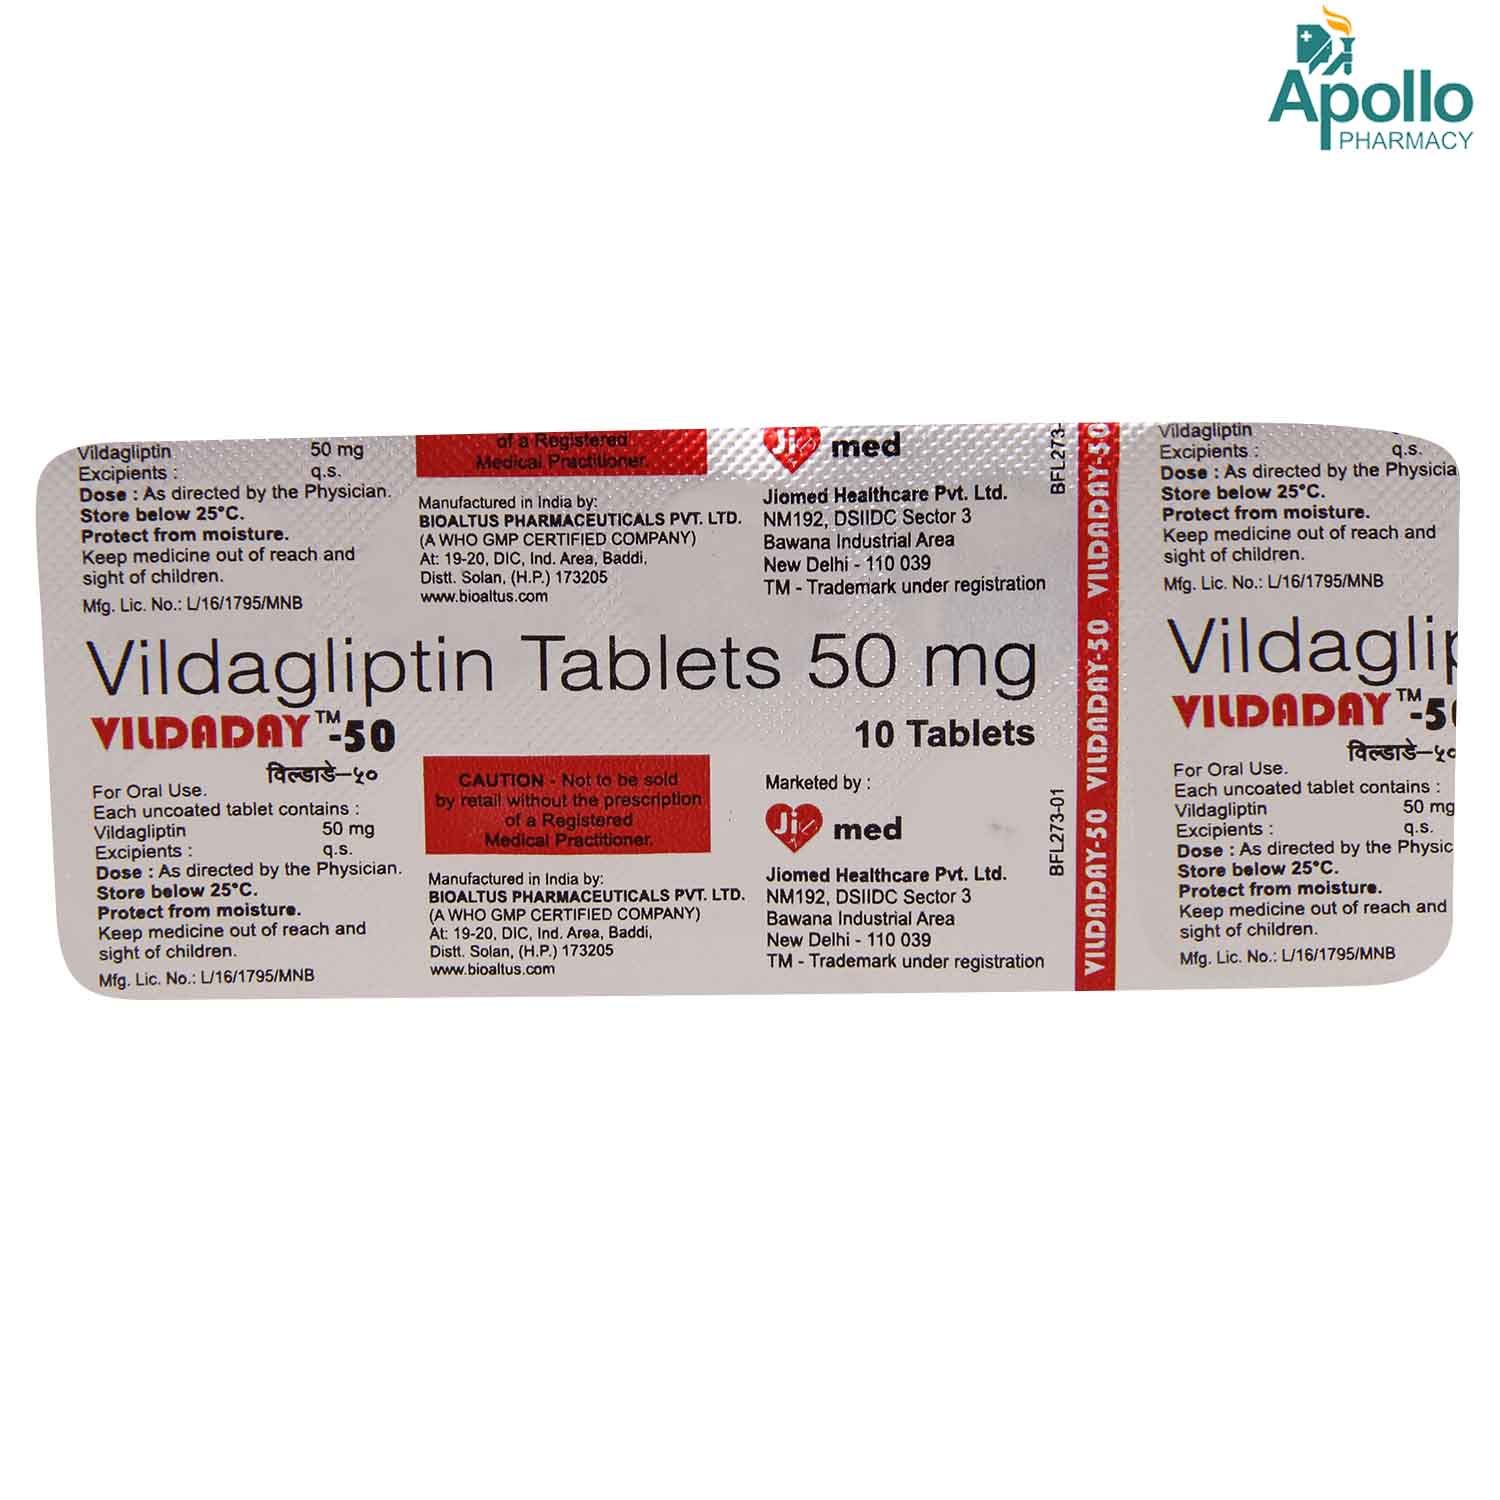 Vildaday-50 Tablet 10's, Pack of 10 TABLETS